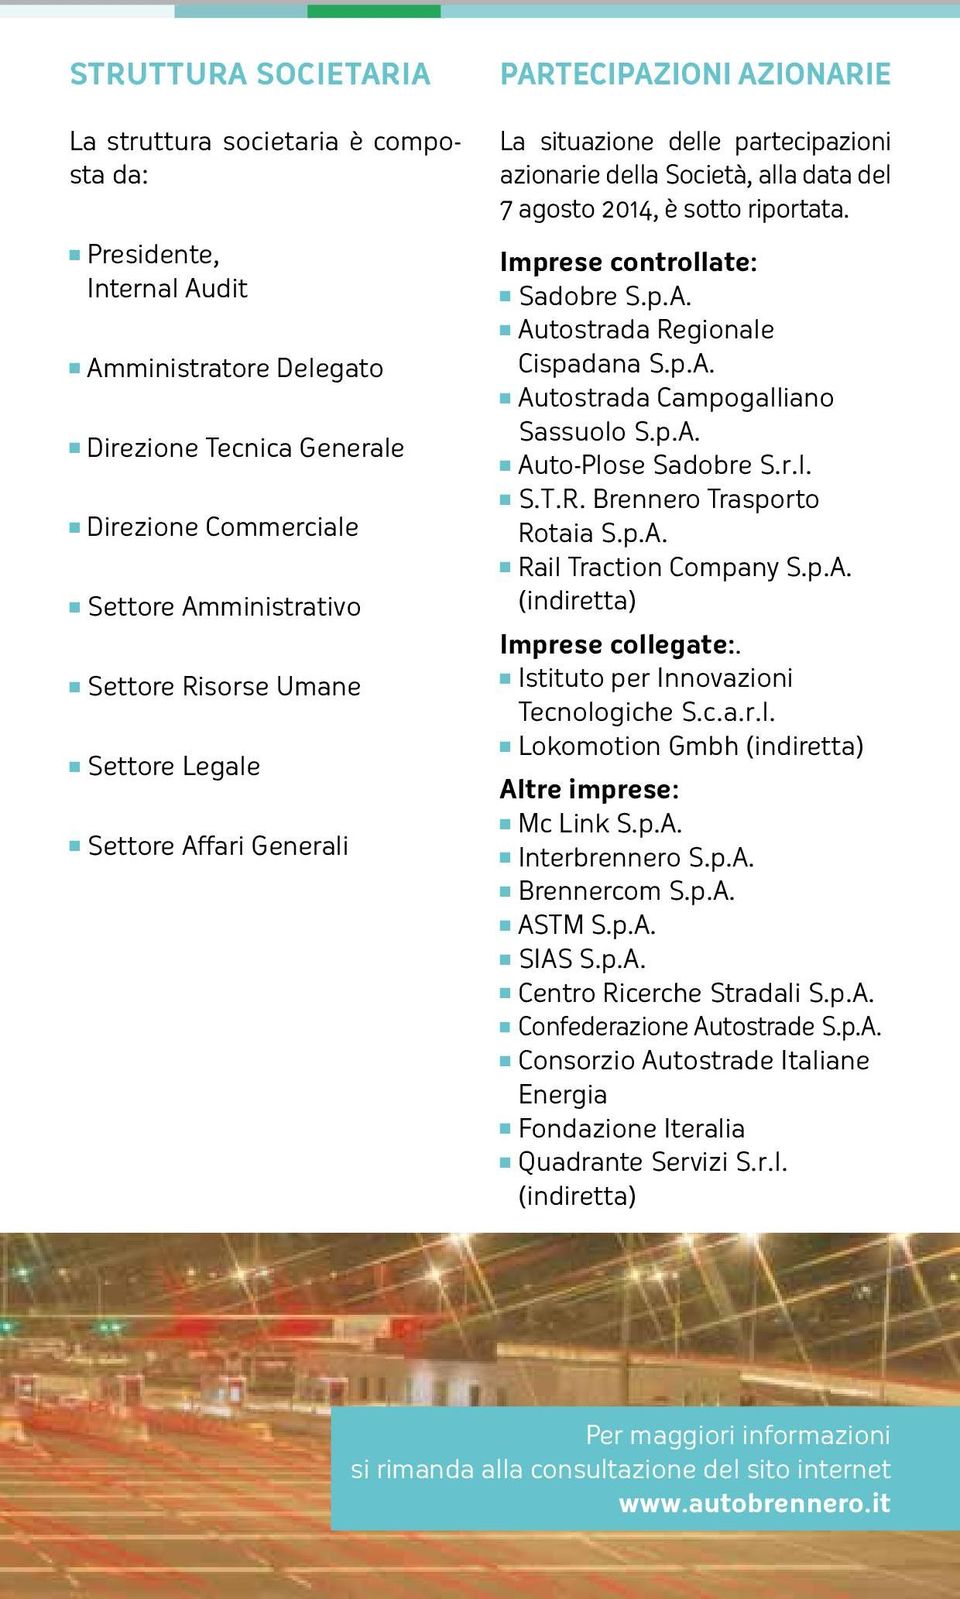 Imprese controllate: Sadobre S.p.A. Autostrada Regionale Cispadana S.p.A. Autostrada Campogalliano Sassuolo S.p.A. Auto-Plose Sadobre S.r.l. S.T.R. Brennero Trasporto Rotaia S.p.A. Rail Traction Company S.